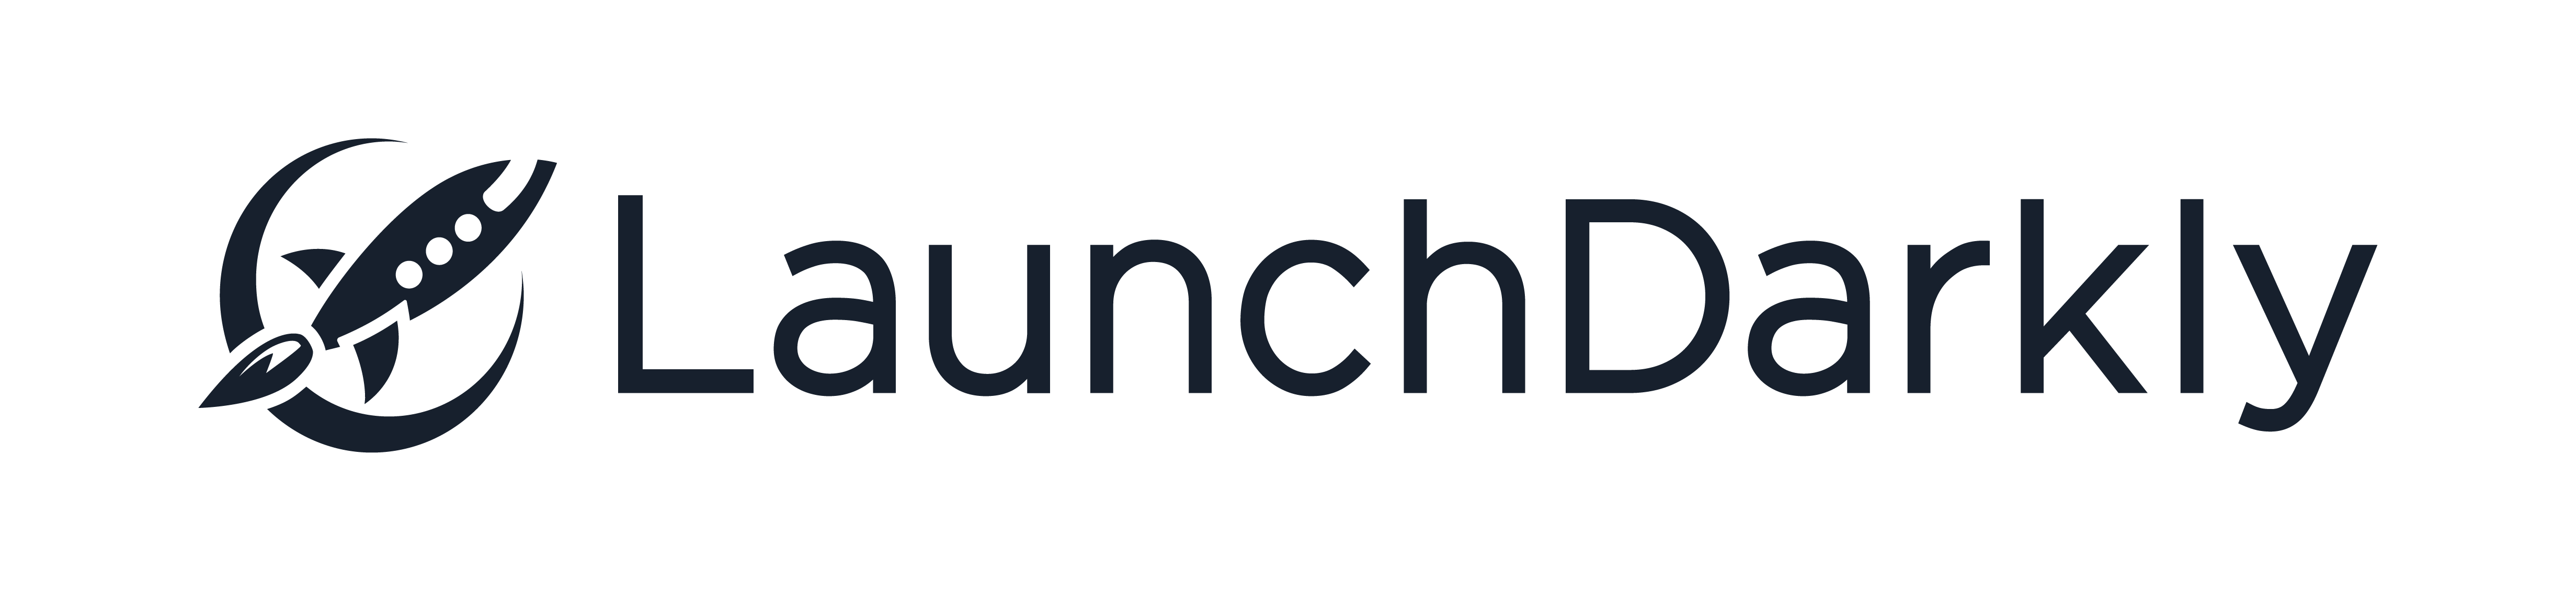 LaunchDarkly logo